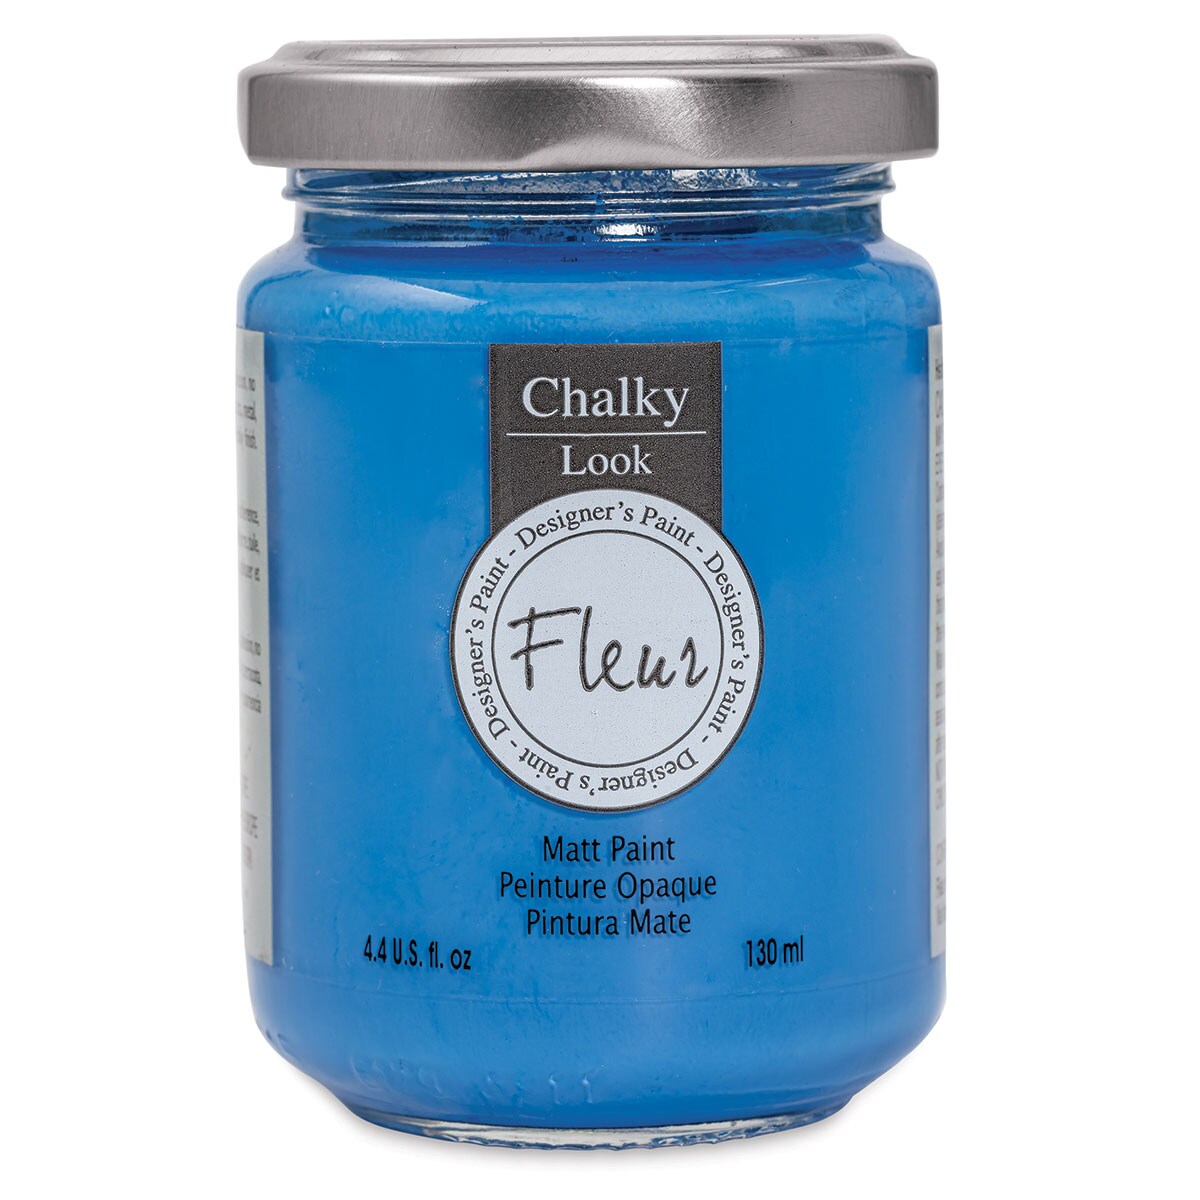 Fleur Chalky Look Paint - Primary Cyan, 4.4 oz jar